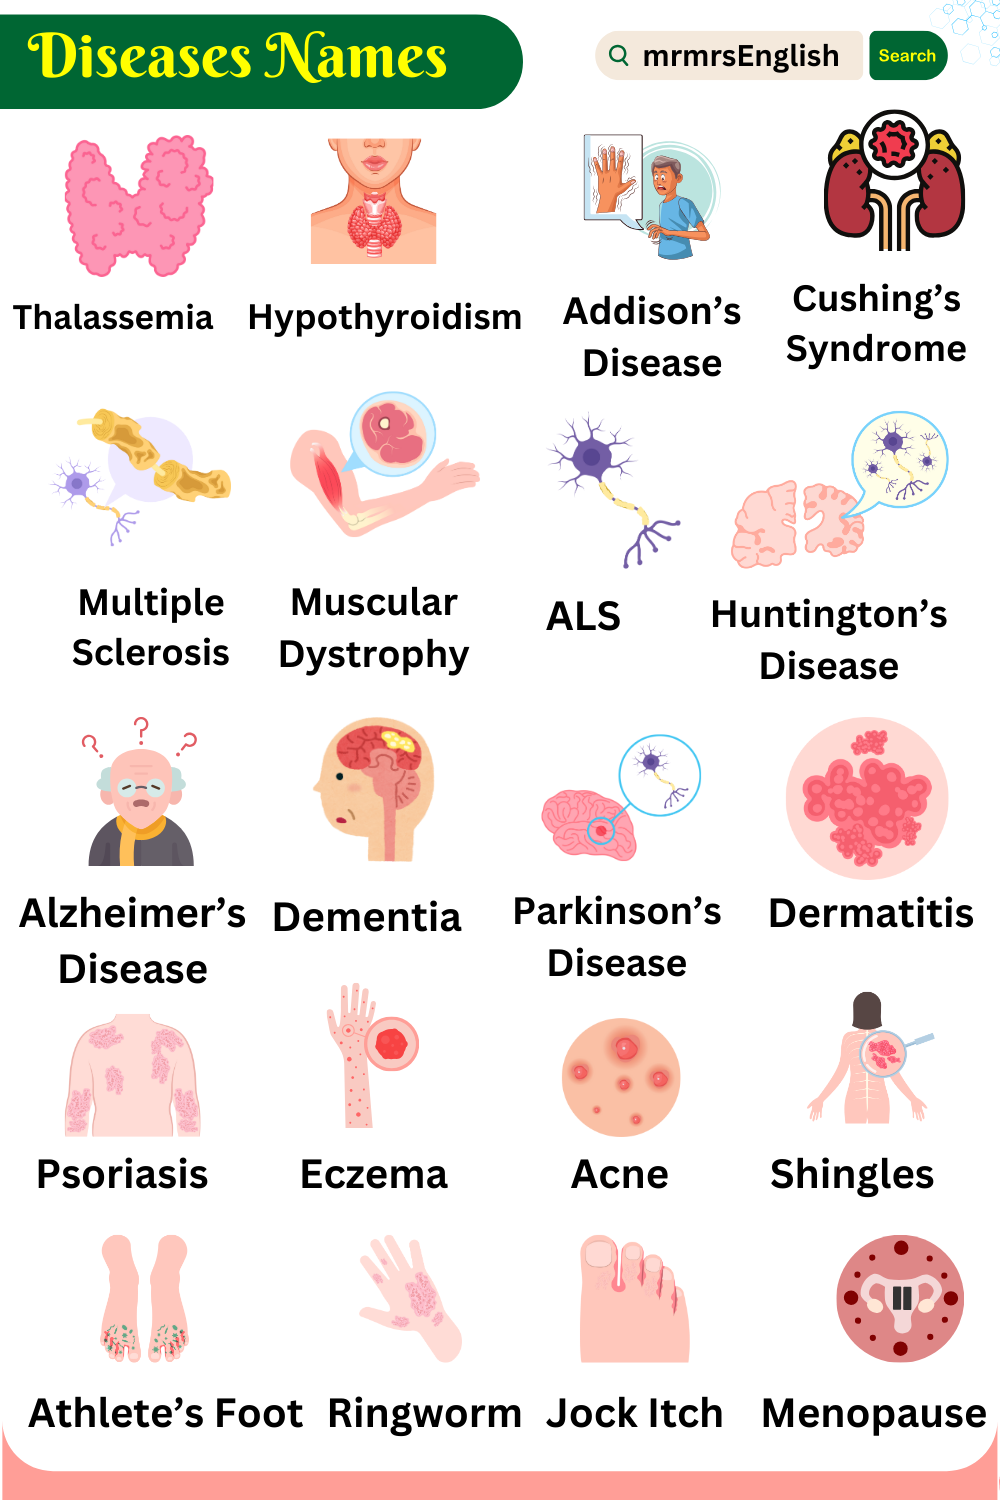 Disease Names in English